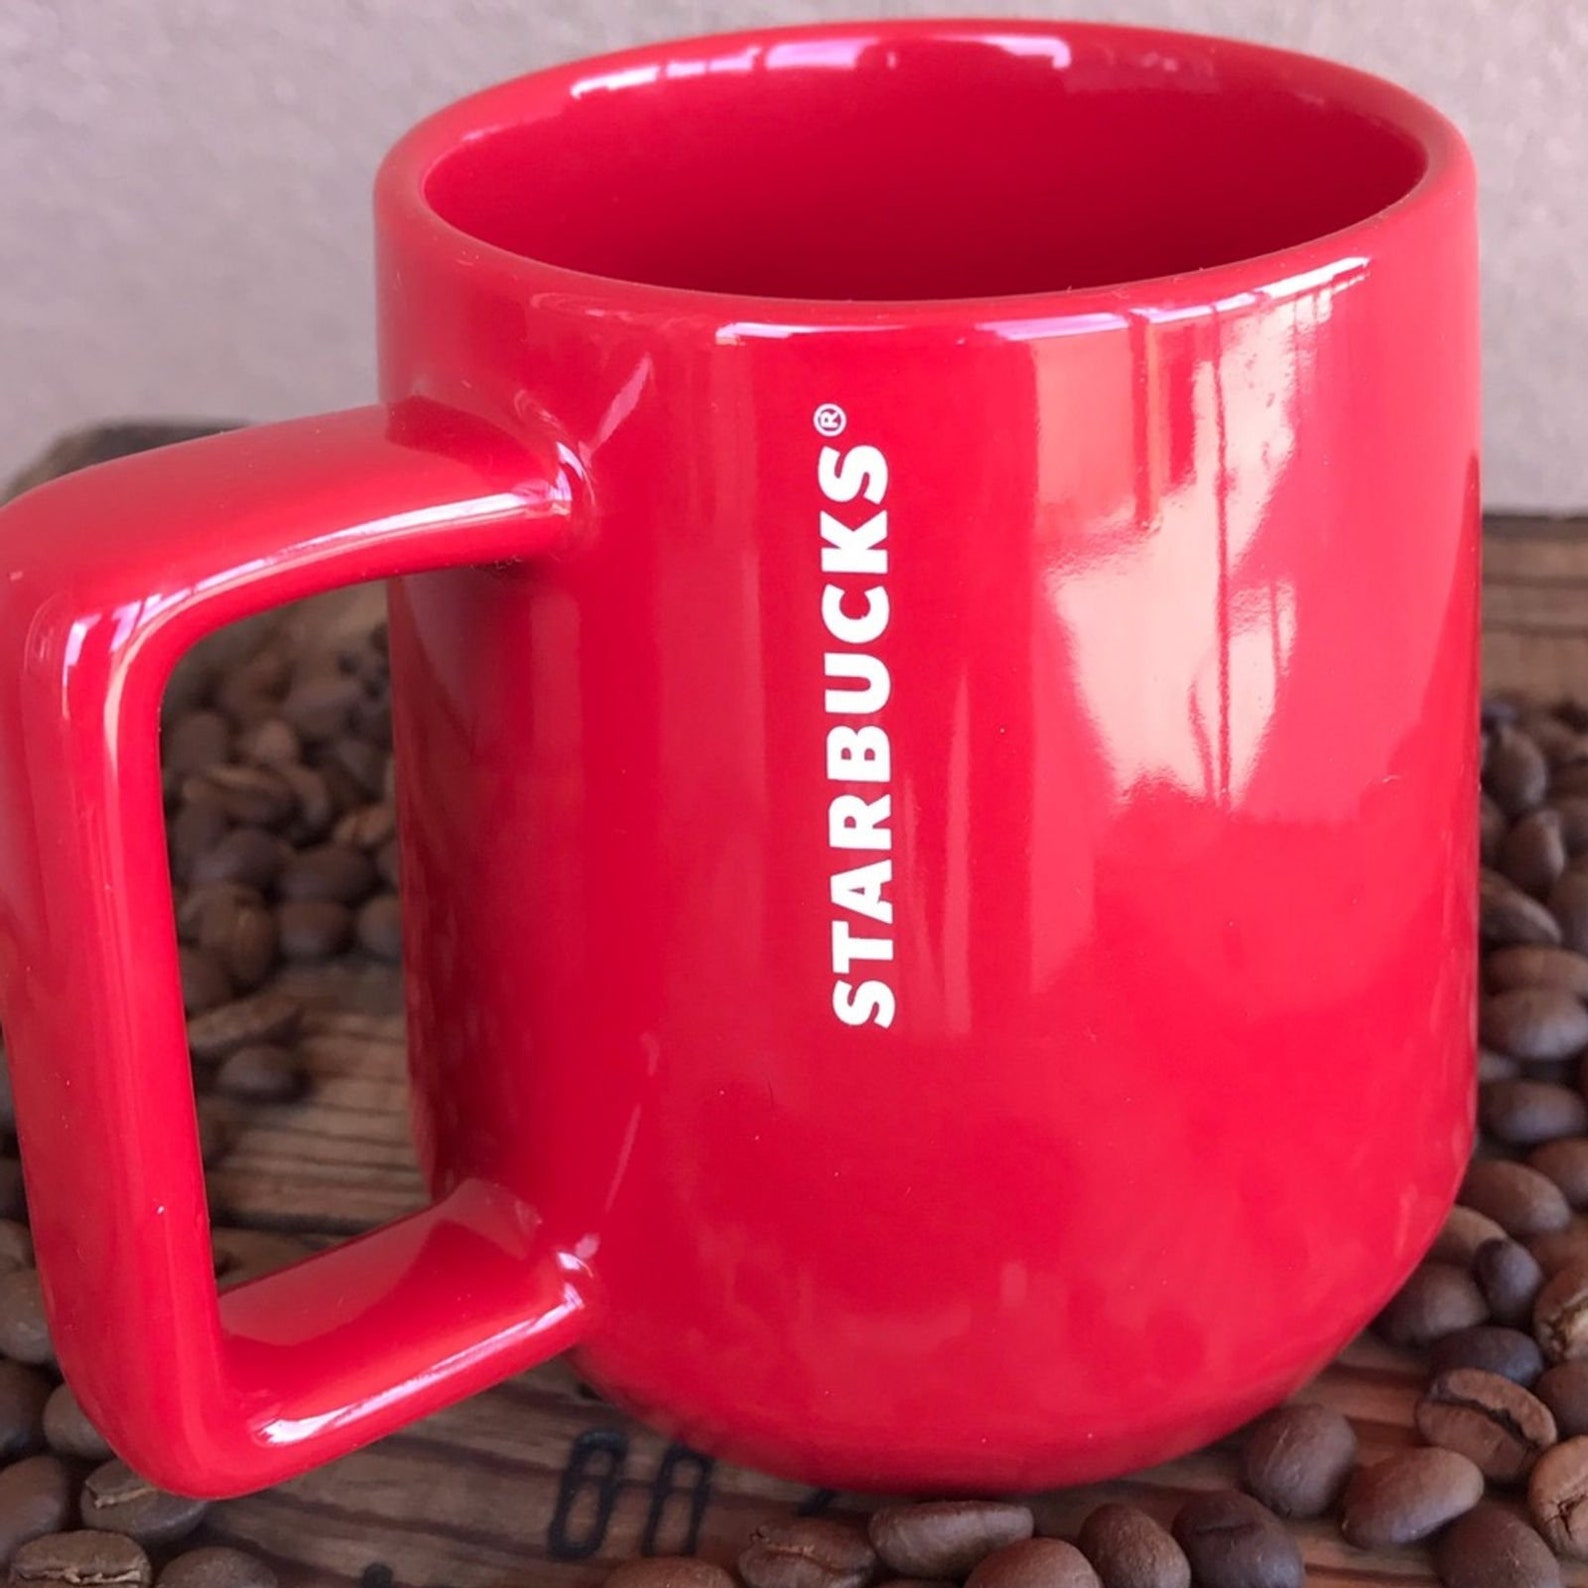 Red Starbucks coffee mug hand warmer | Etsy